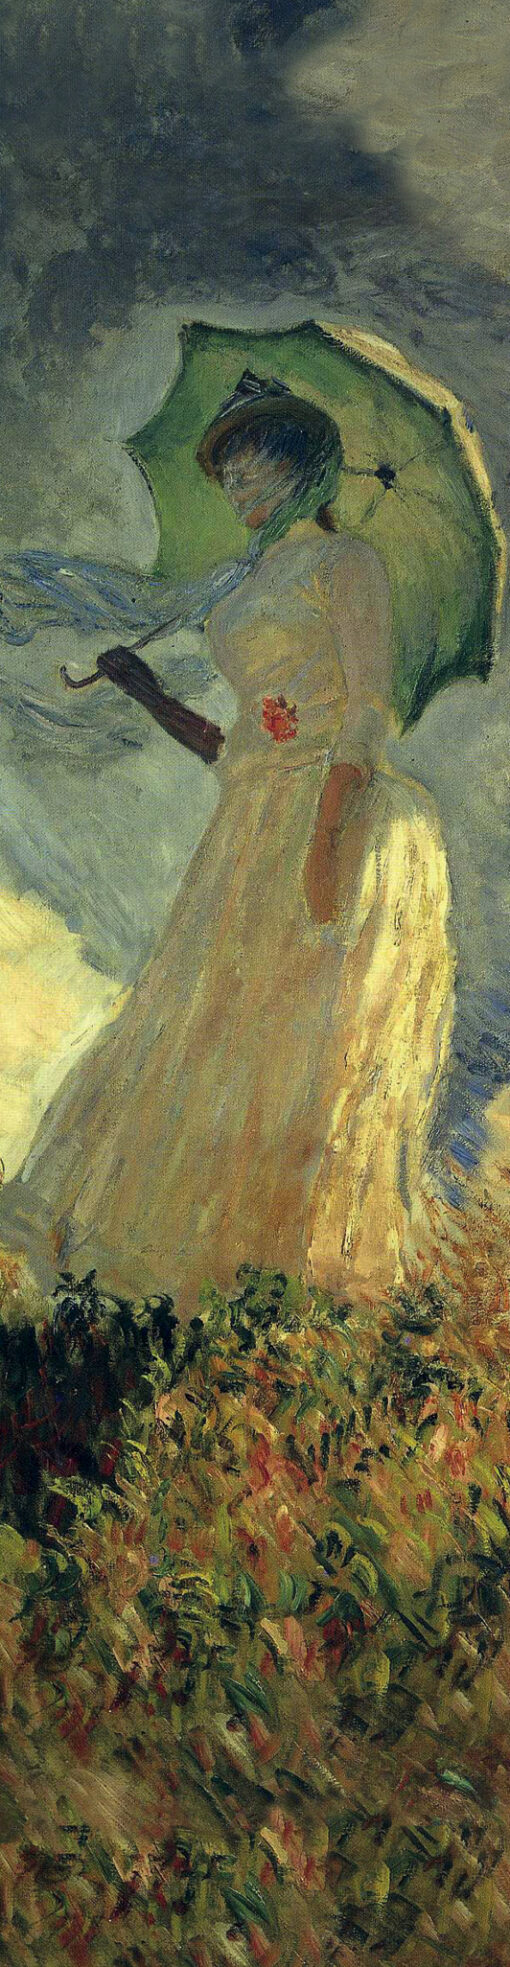 Rubber band. Claude Monet. Woman with umbrella